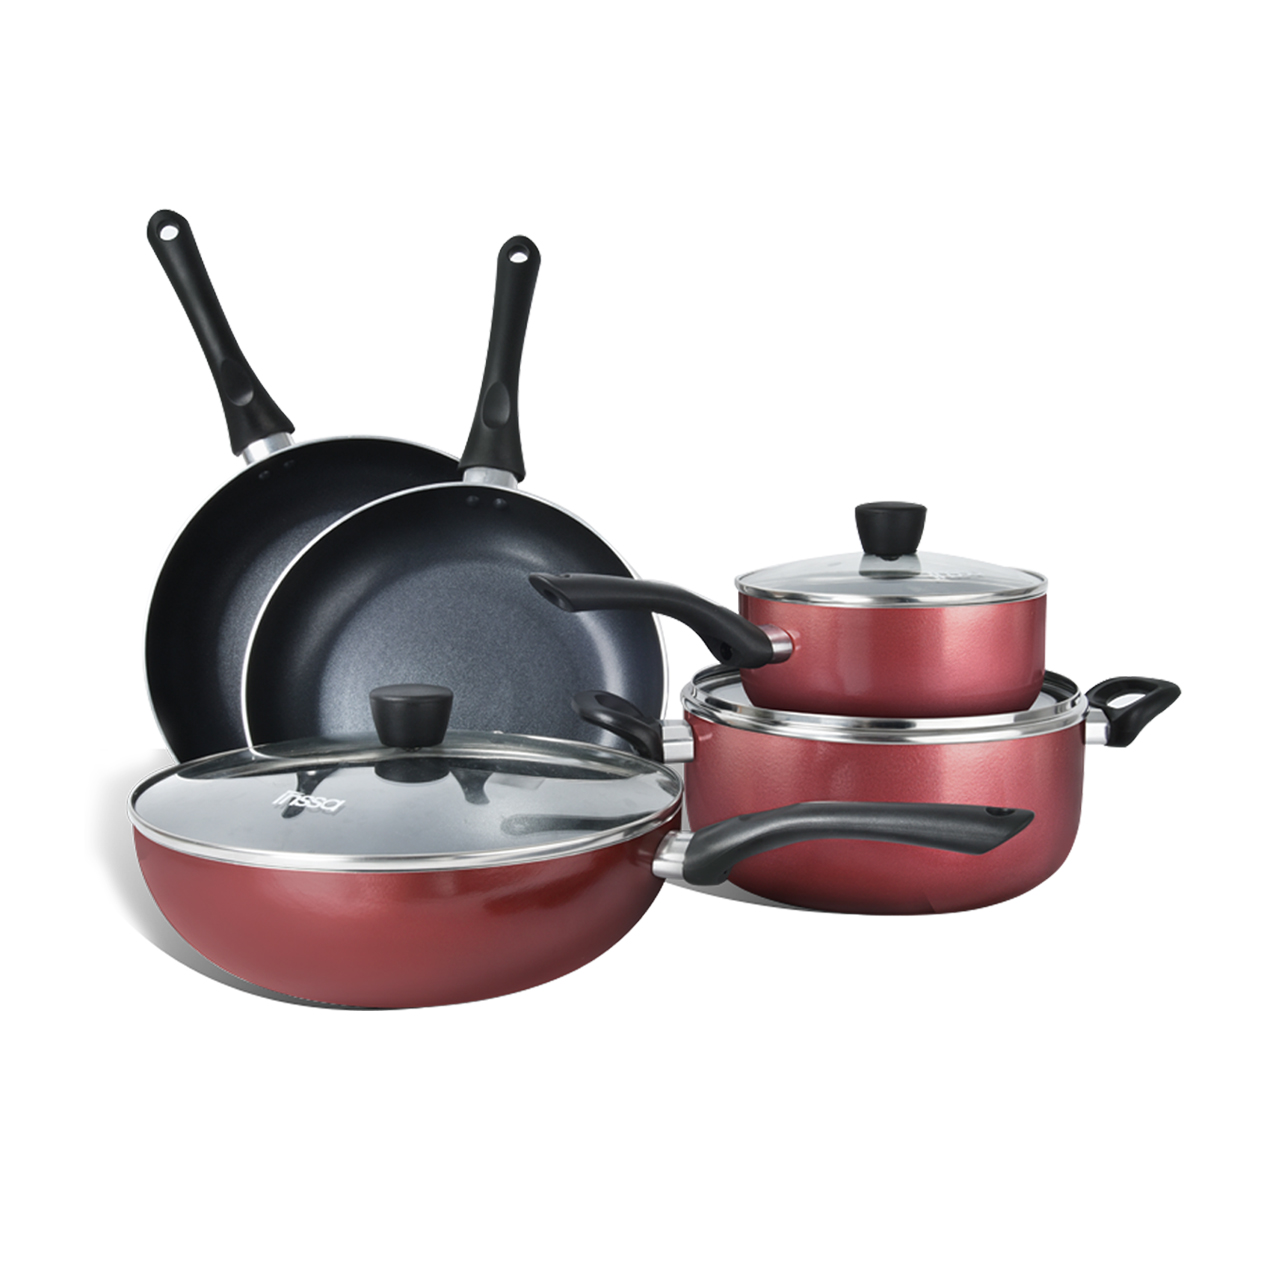 USER MANUAL - INSSA Aluminum Saucepan Wok/Frying Pan